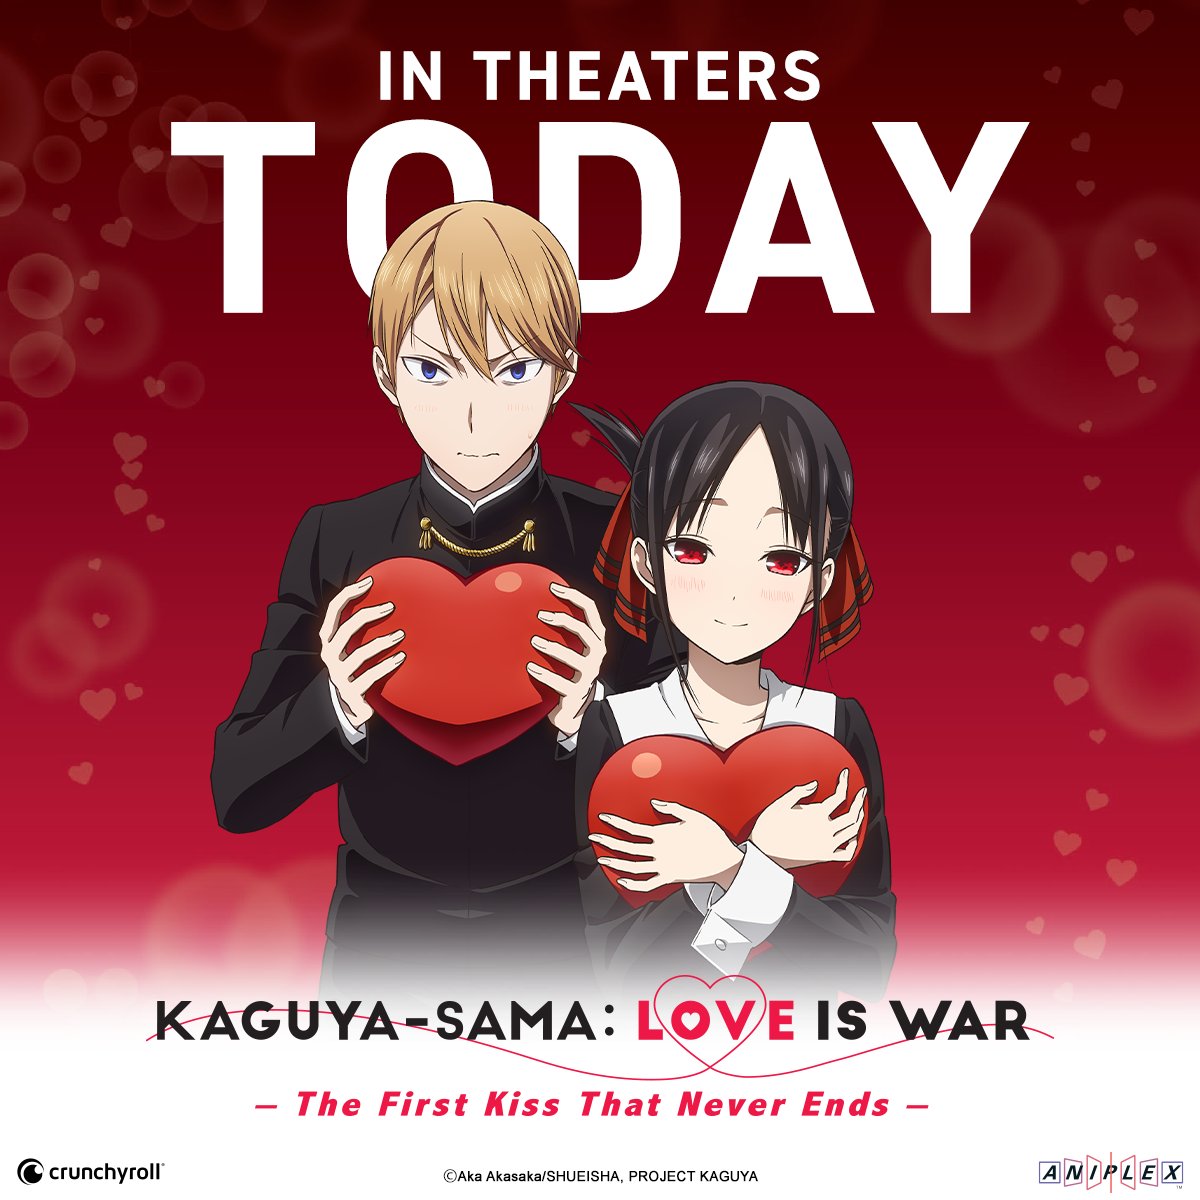  'Kaguya-sama: The First Kiss That Never Ends' estreia  na Crunchyroll